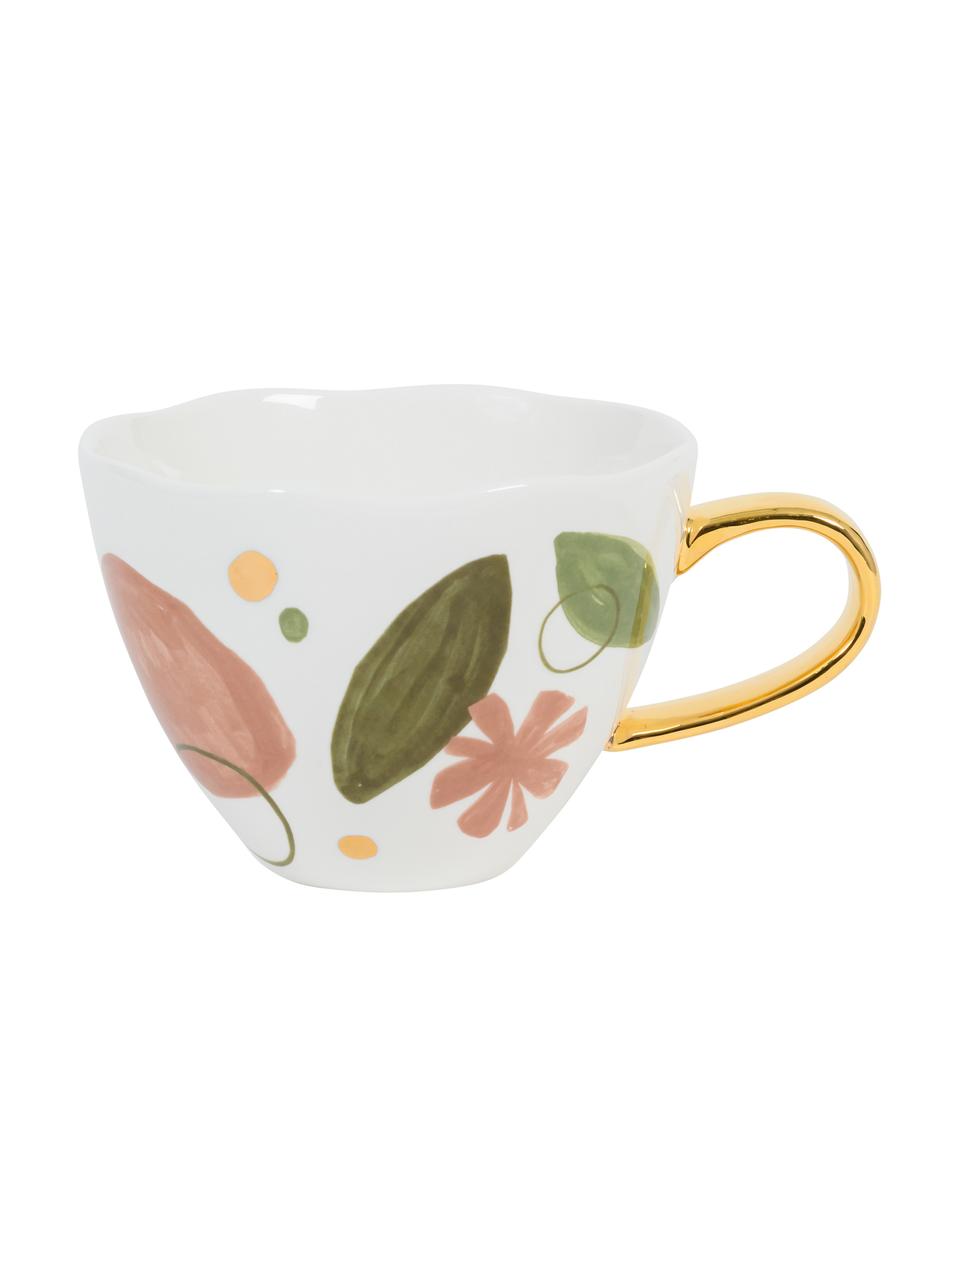 Tasse en porcelaine avec poignée dorée Good Morning Expressive, Blanc, rose, vert, couleur dorée